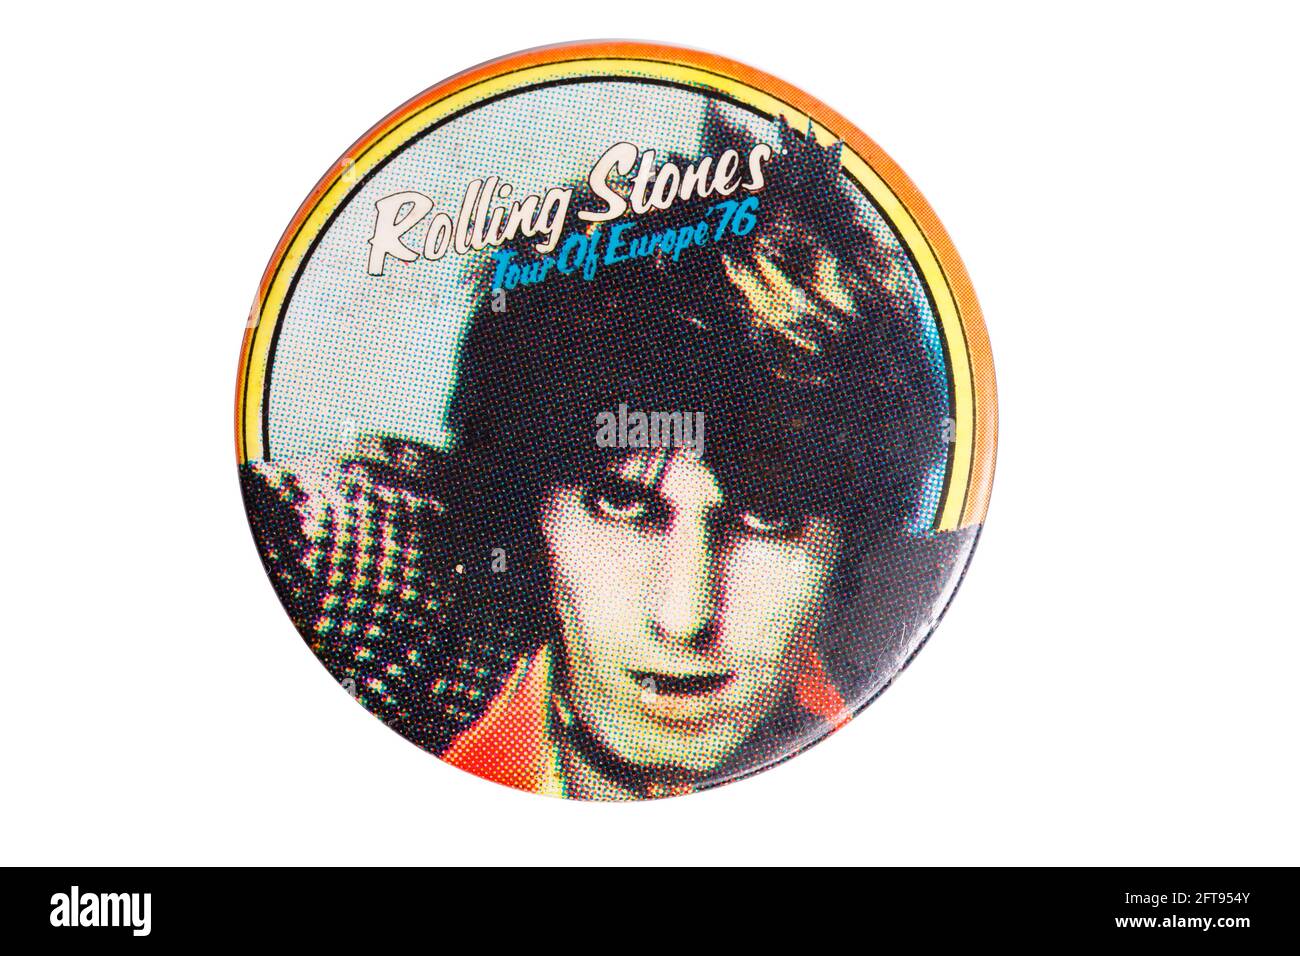 Rare Rolling Stones 'Tour of Europe 76' Tour memento pin badge, showing Keith Richards. Stock Photo